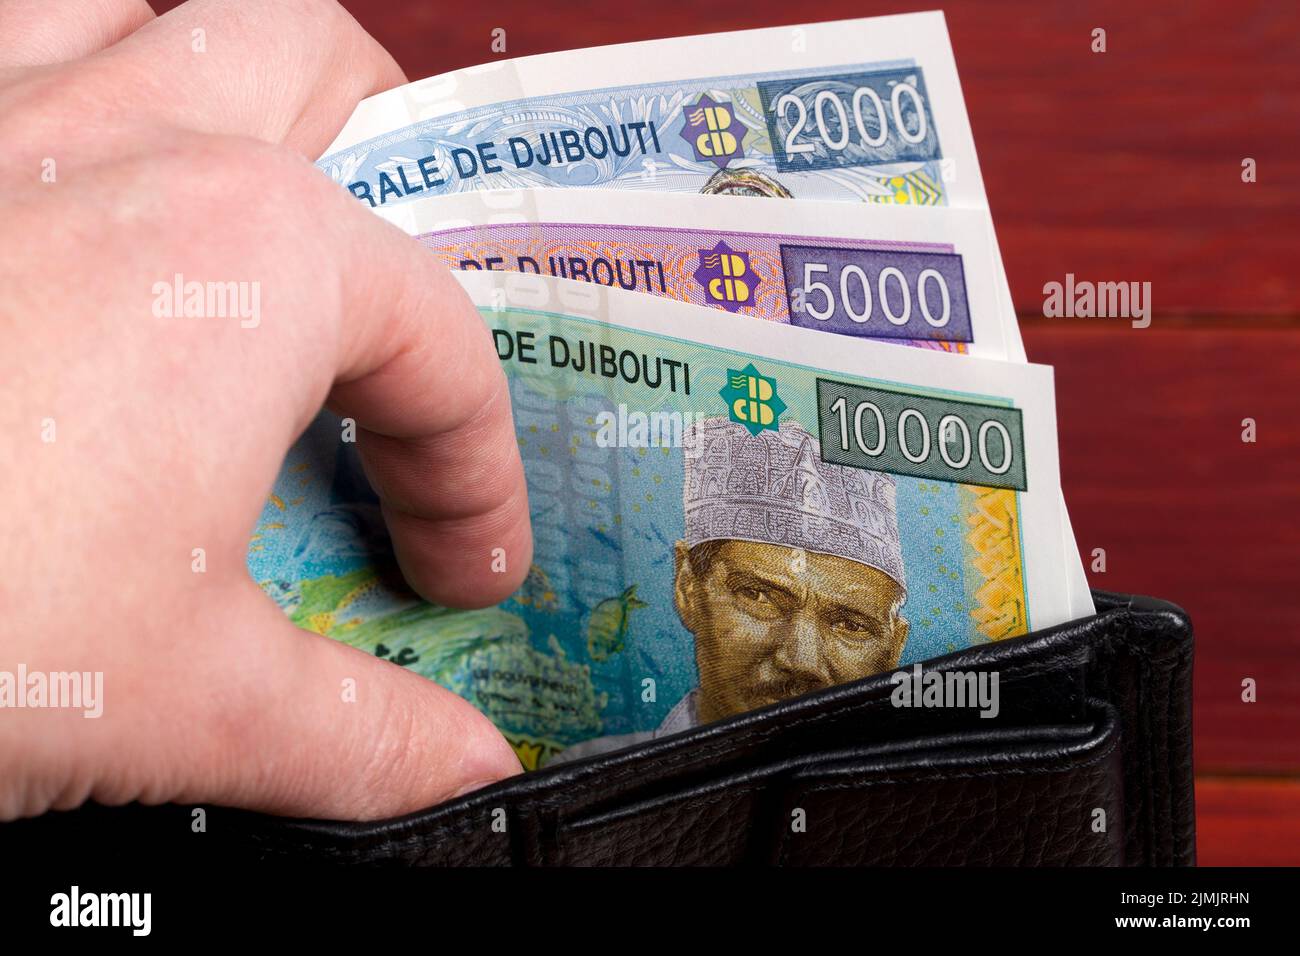 Djiboutian franc in the black wallet Stock Photo